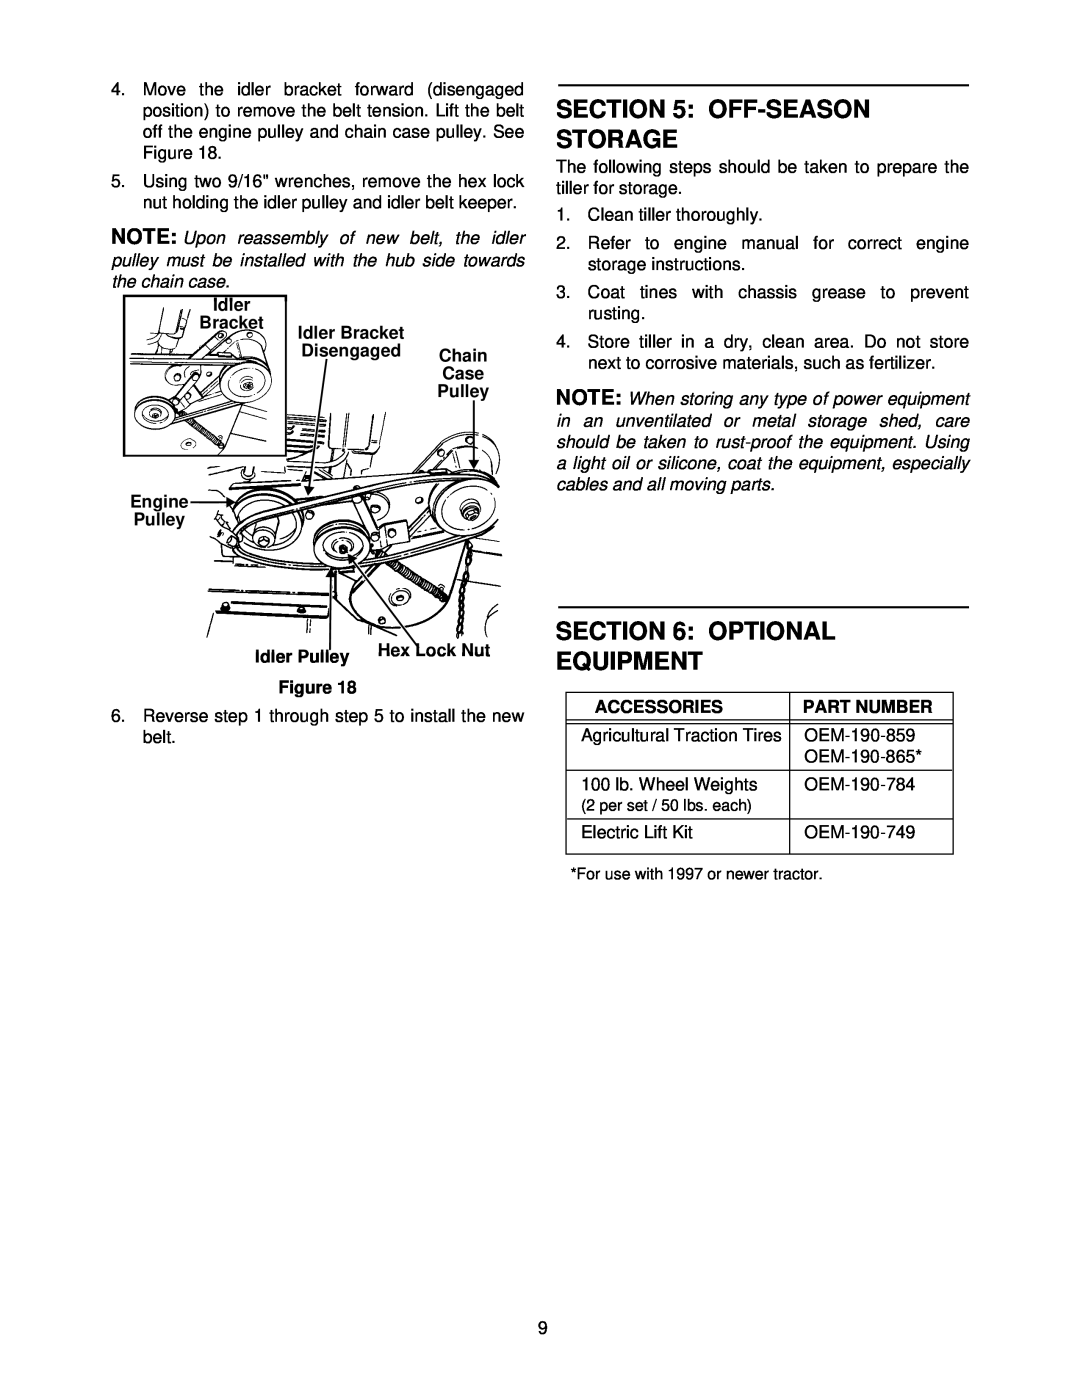 Bolens 190-758 manual Off-Season Storage, Optional Equipment, Idler Bracket Engine Pulley, Idler Pulley, Hex Lock Nut 